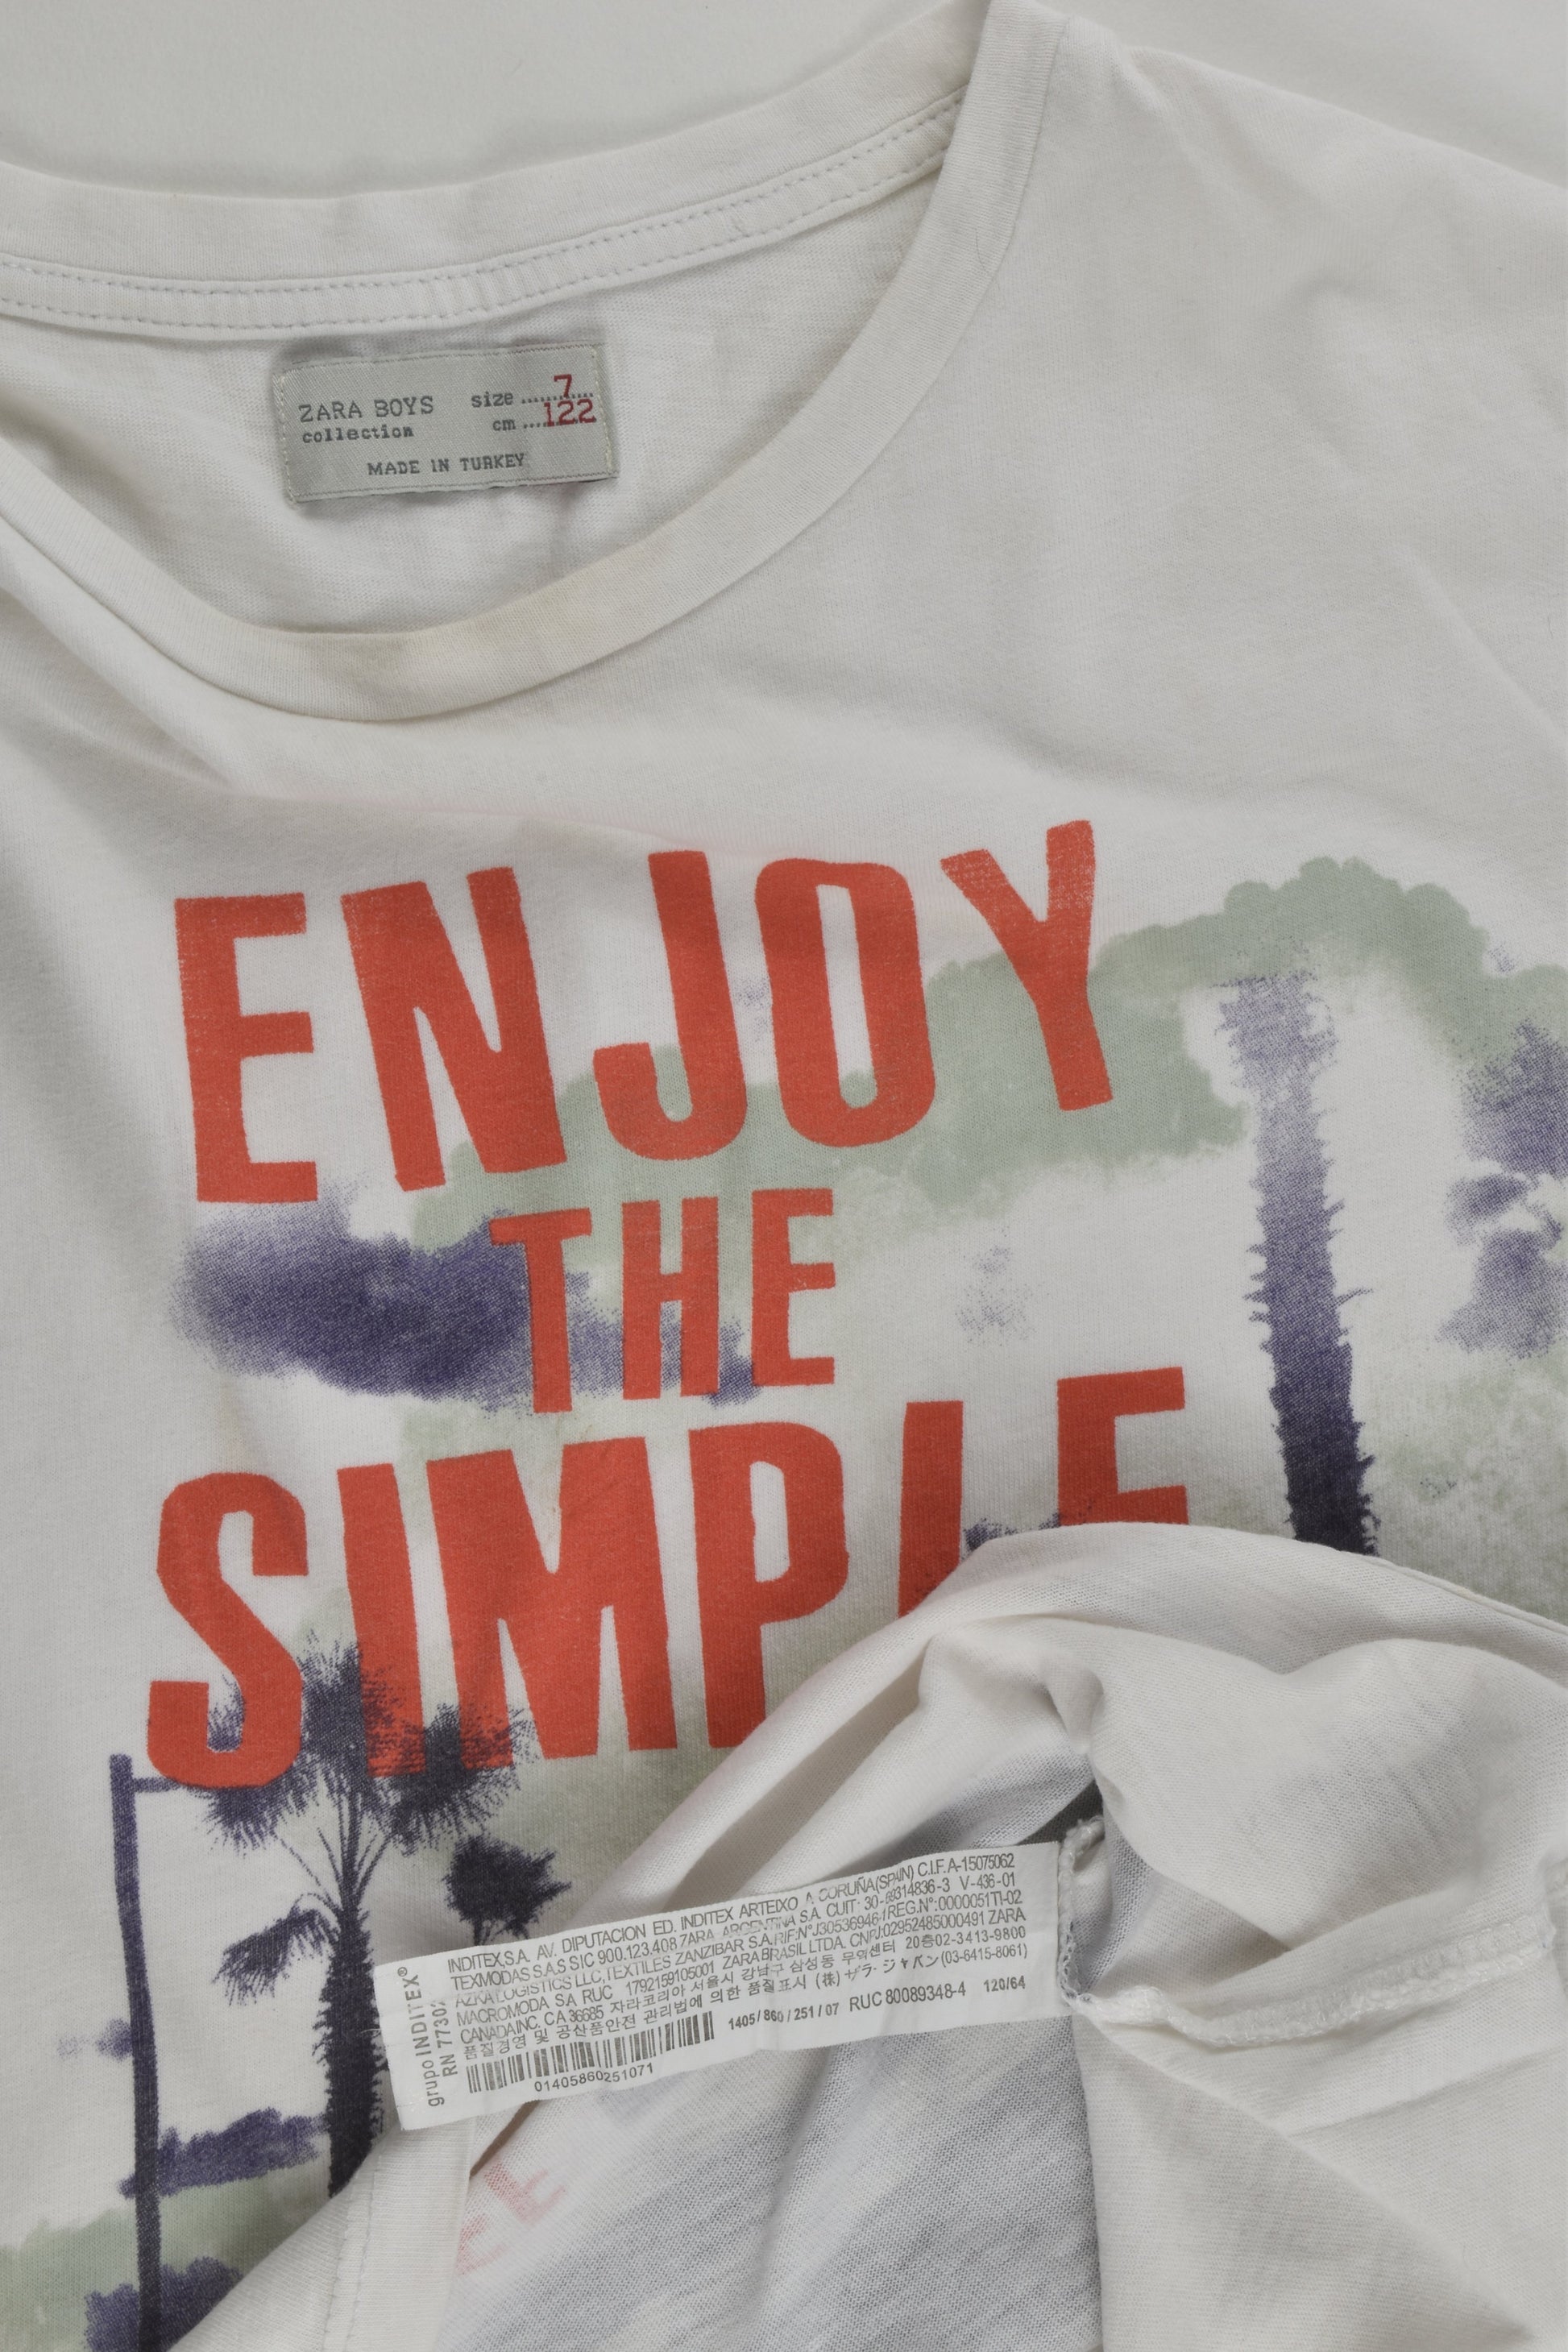 Zara Size 7 (122 cm) 'Enjoy The Simple Life' T-shirt